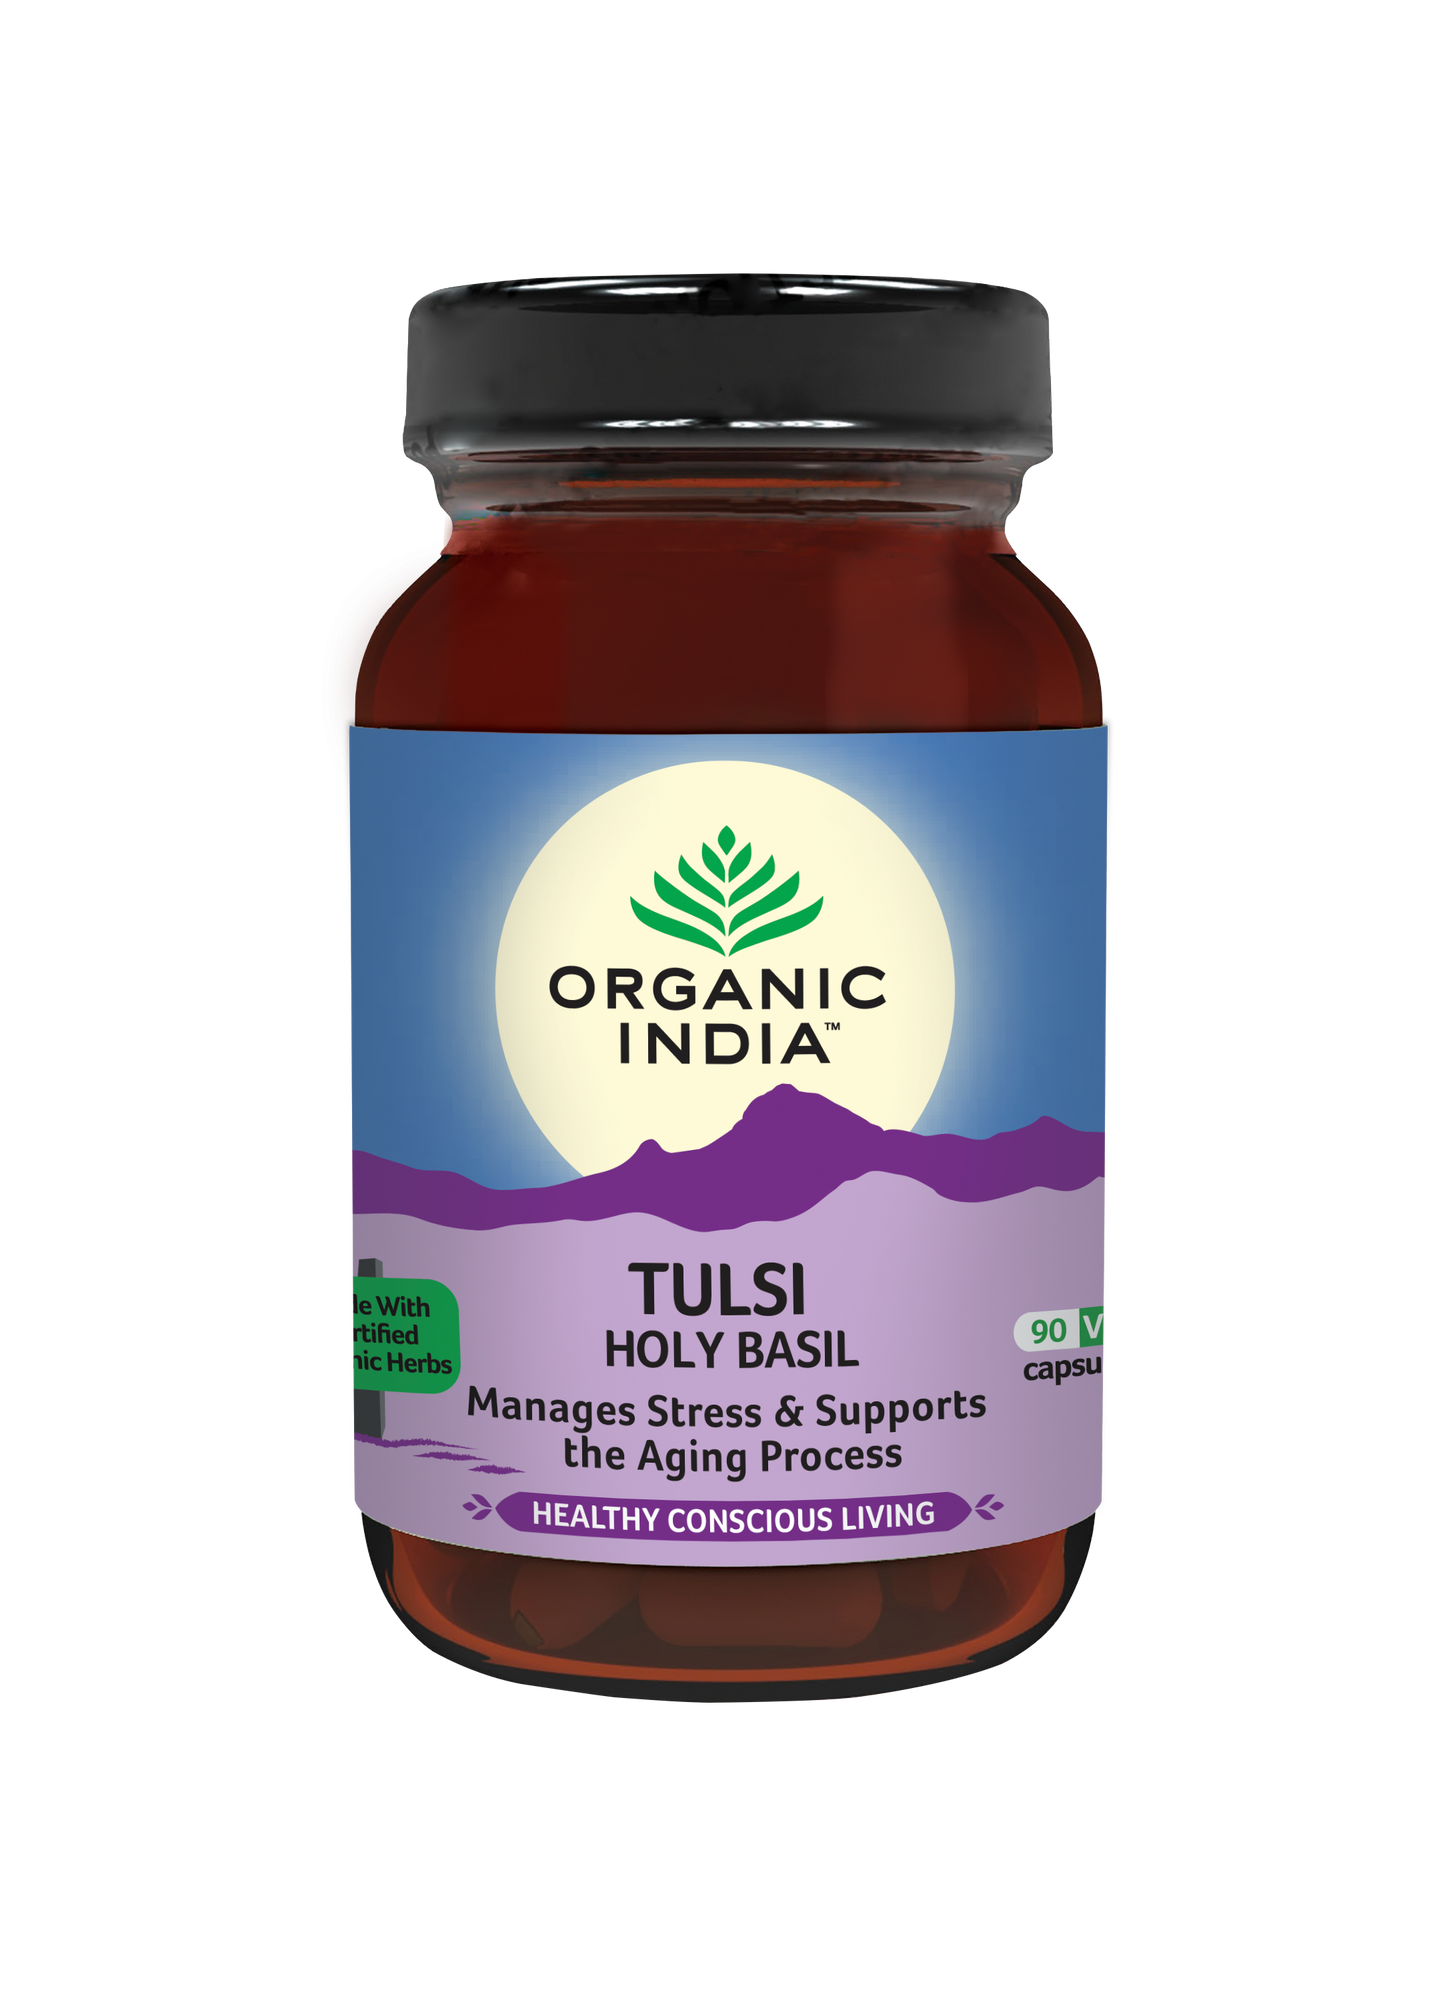 Tulsi-Holy Basil